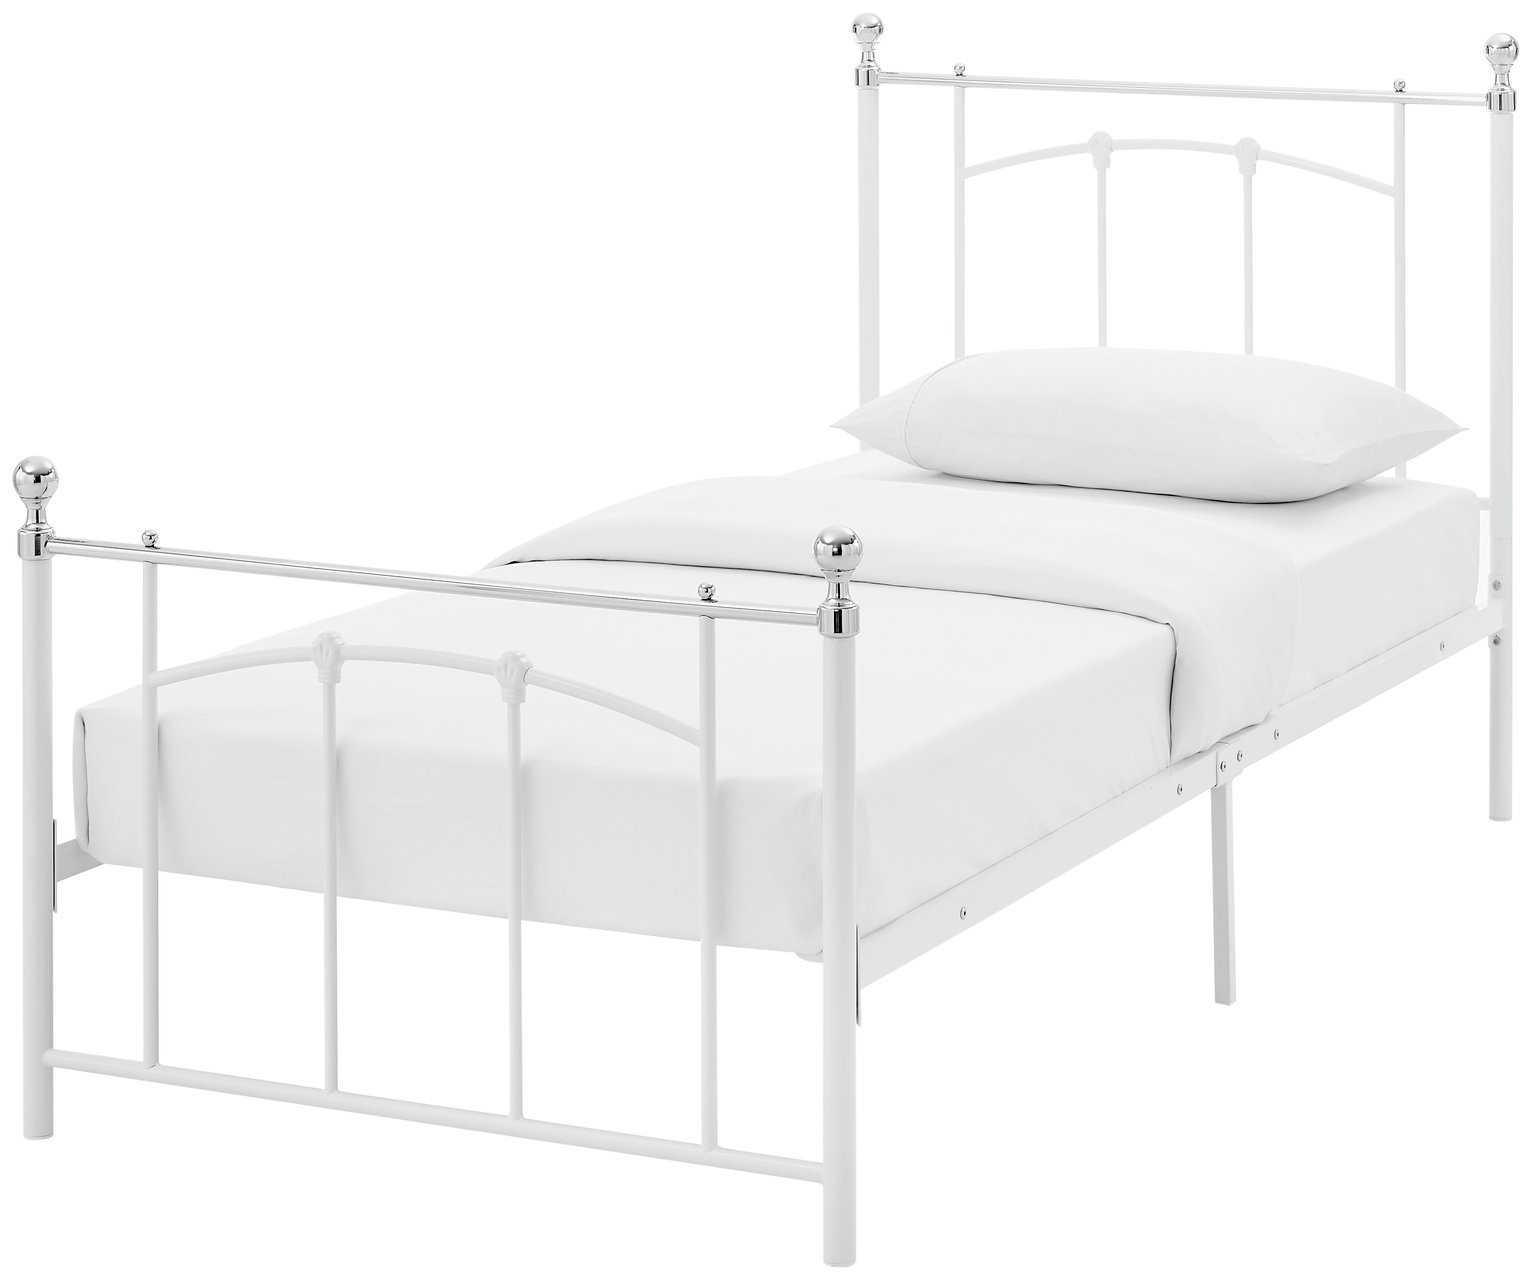 Argos Home Yani Single Metal Bed Frame - White